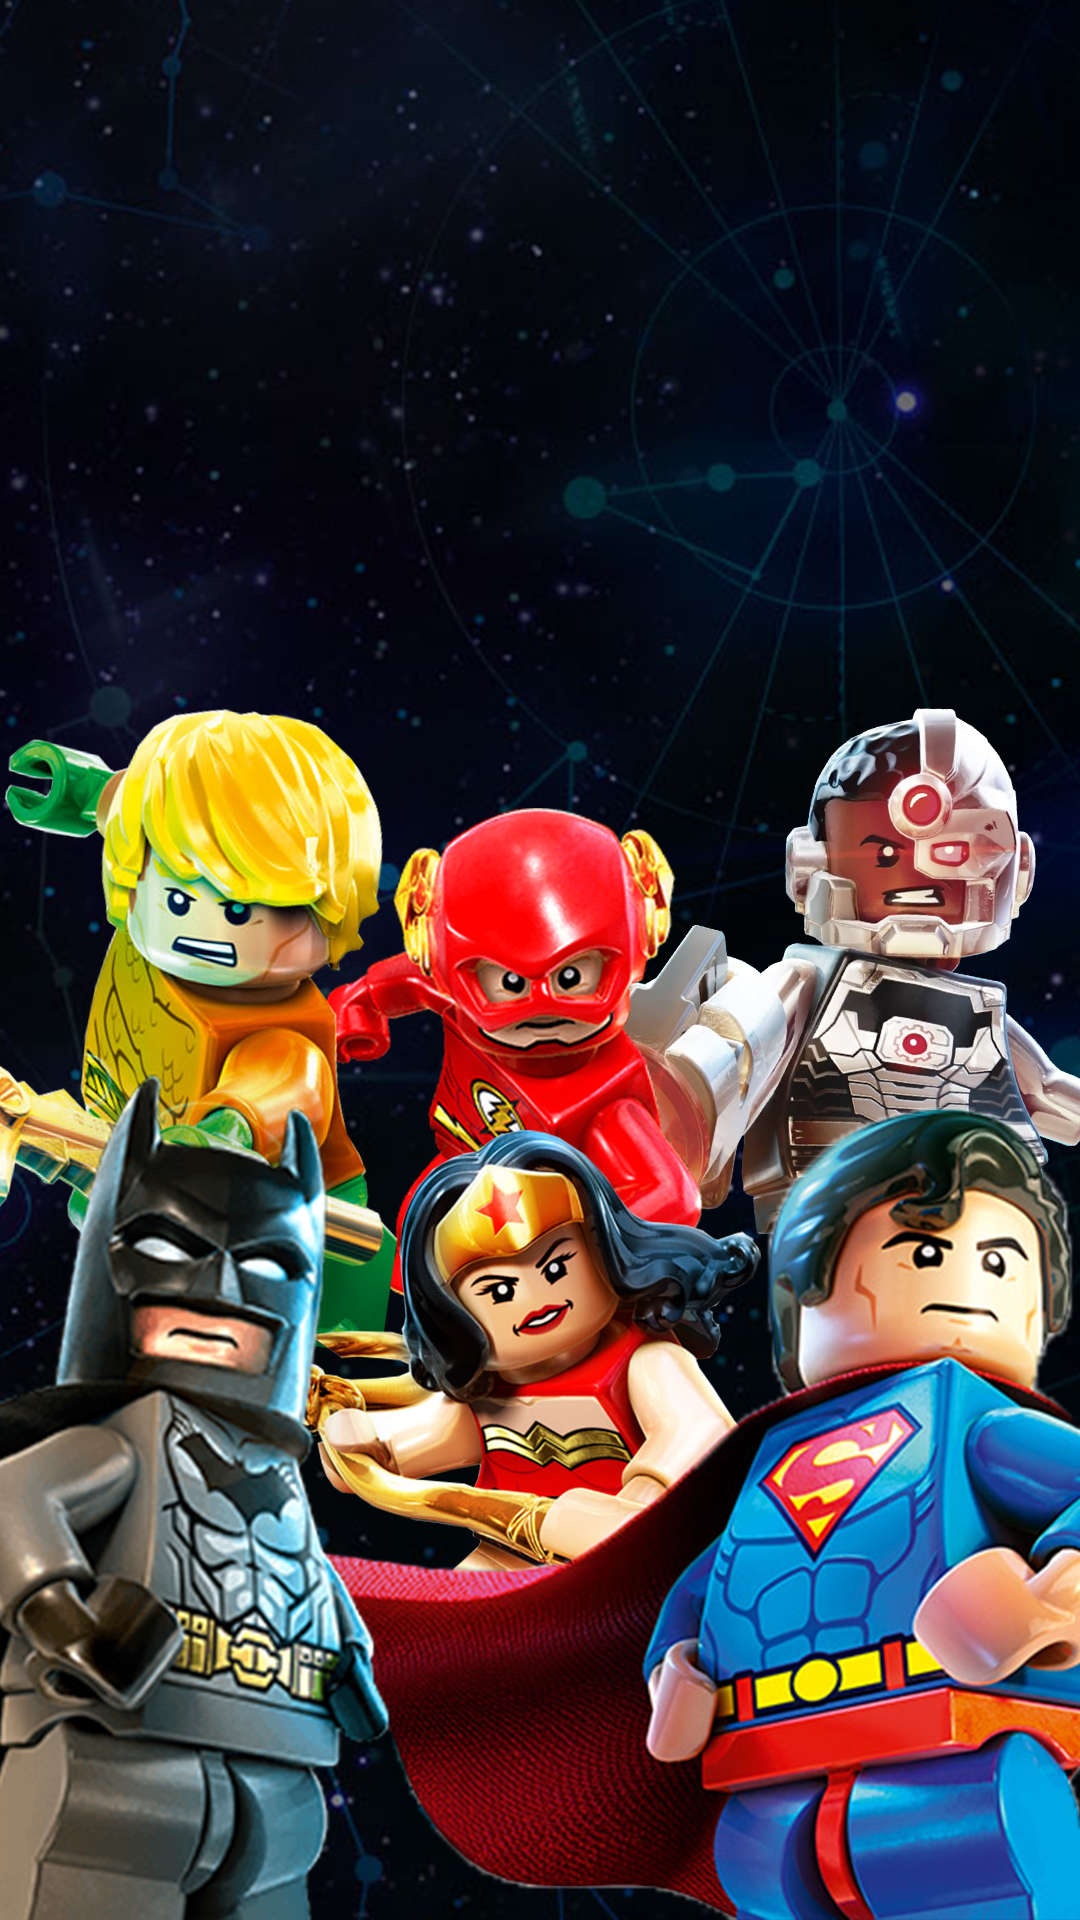 fond d'écran superman,dessin animé,jouet,héros,figurine,lego